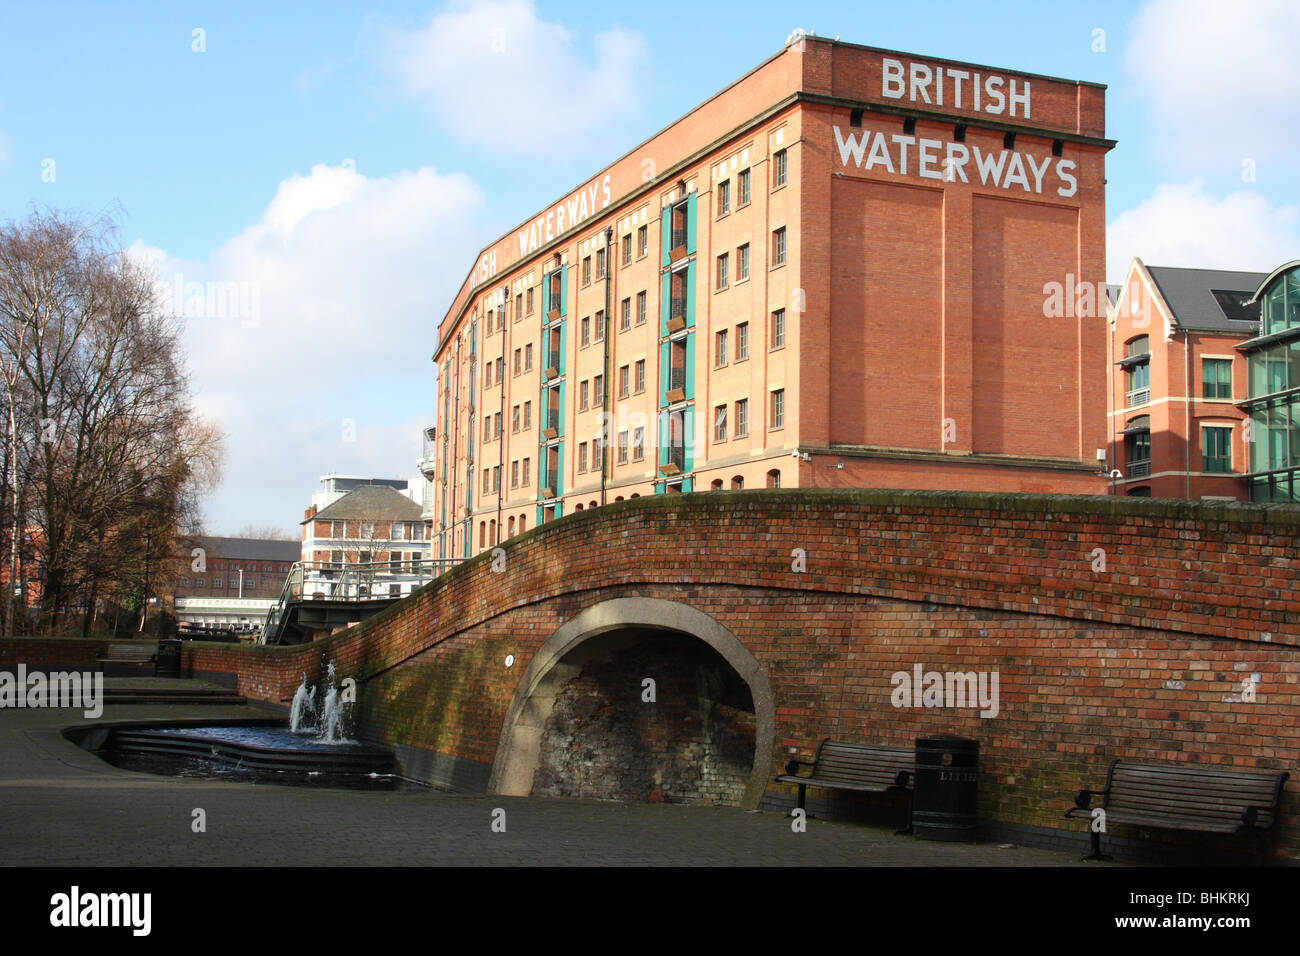 The British Waterway's building in Nottingham, Engalnd, U.K. Stock Photo